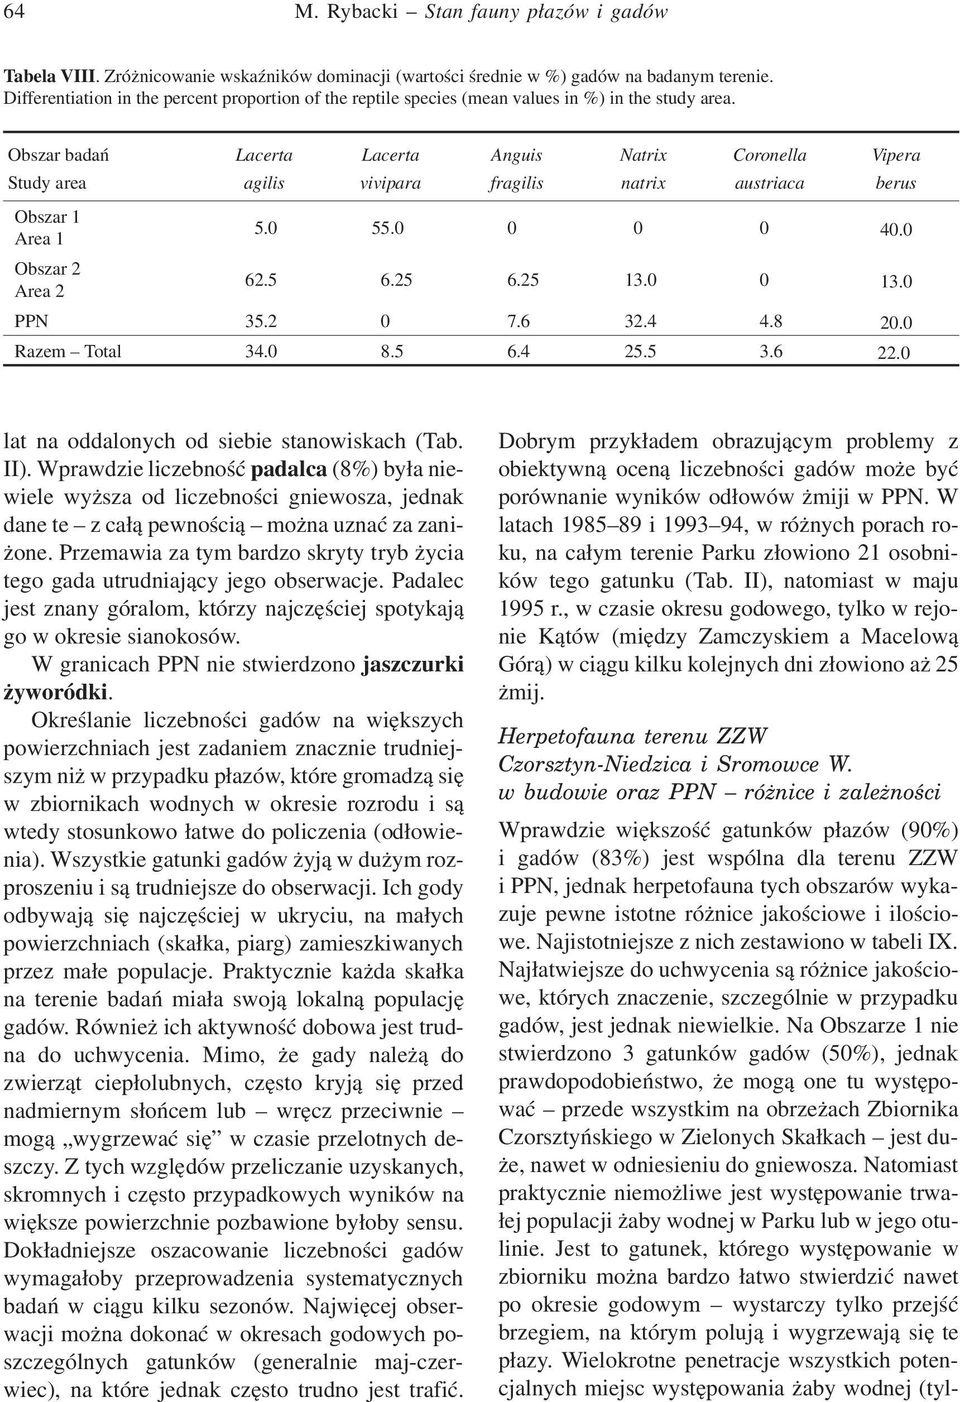 Obszar badań Study area Lacerta agilis Lacerta vivipara Anguis fragilis Natrix natrix Coronella austriaca Vipera berus Obszar 1 Area 1 5.0 55.0 0 0 0 40.0 Obszar 2 Area 2 62.5 6.25 6.25 13.0 0 13.